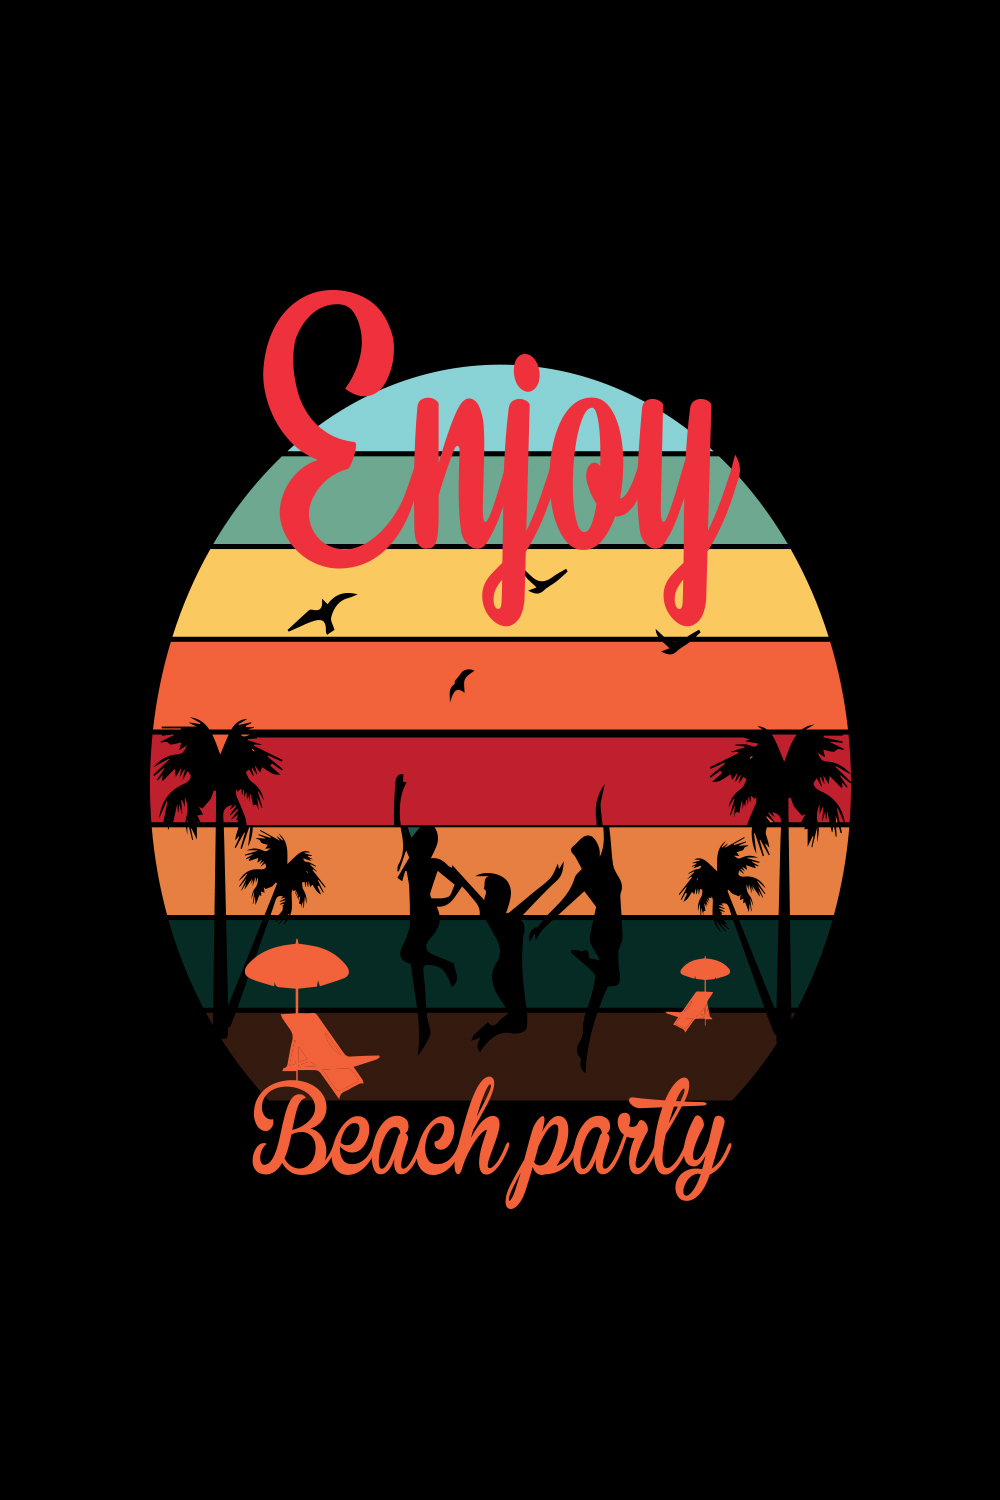 Enjoy Beach party t shirt design pinterest preview image.